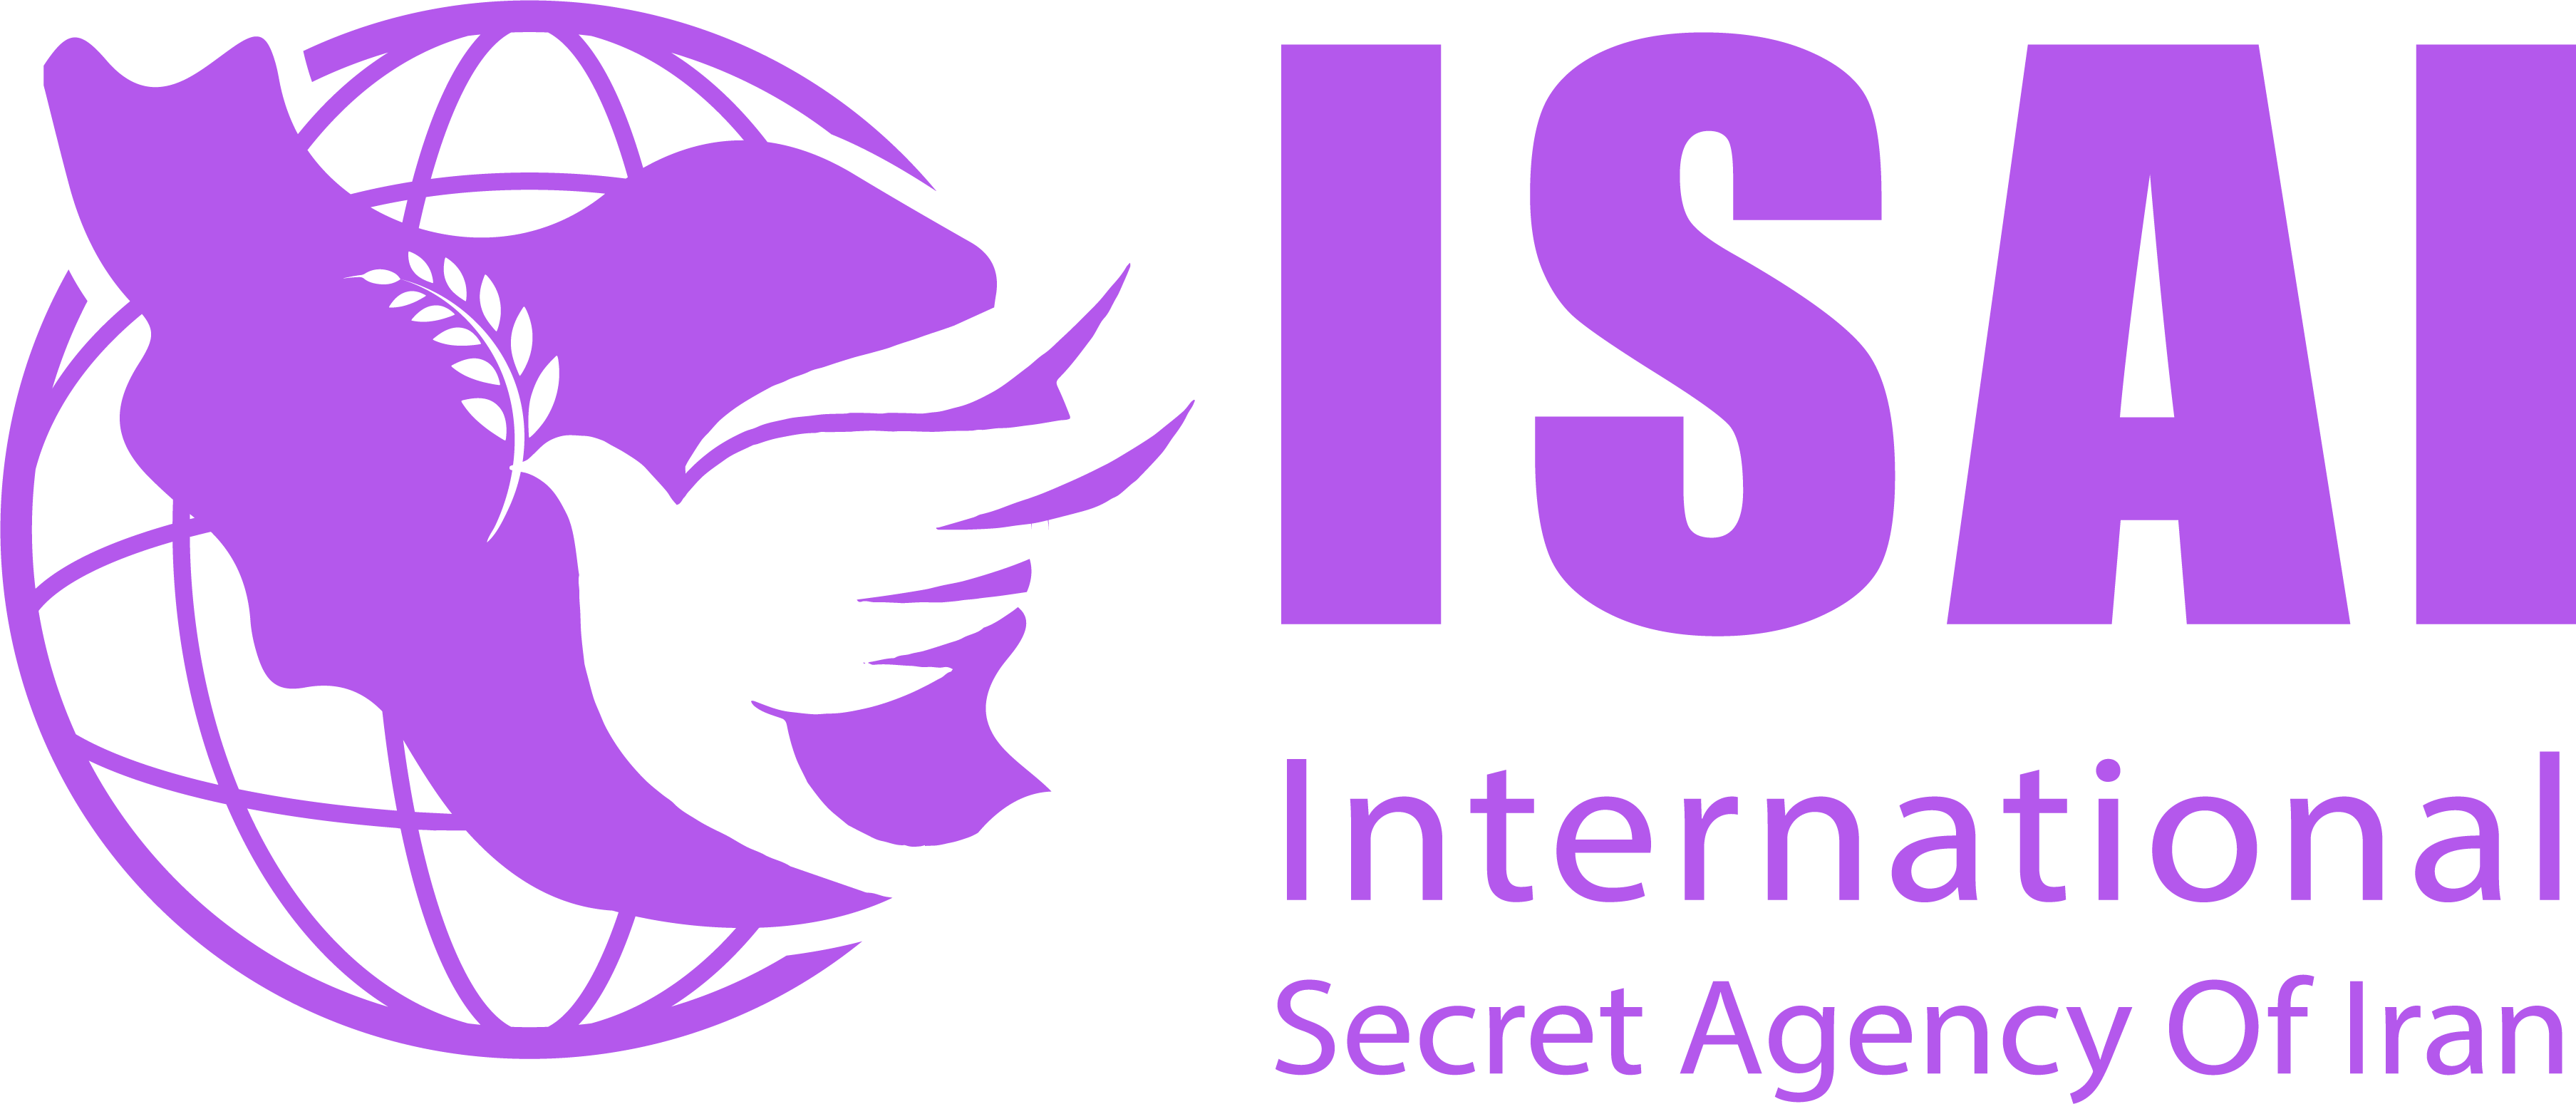 ISAI International Secret Agency of IRAN